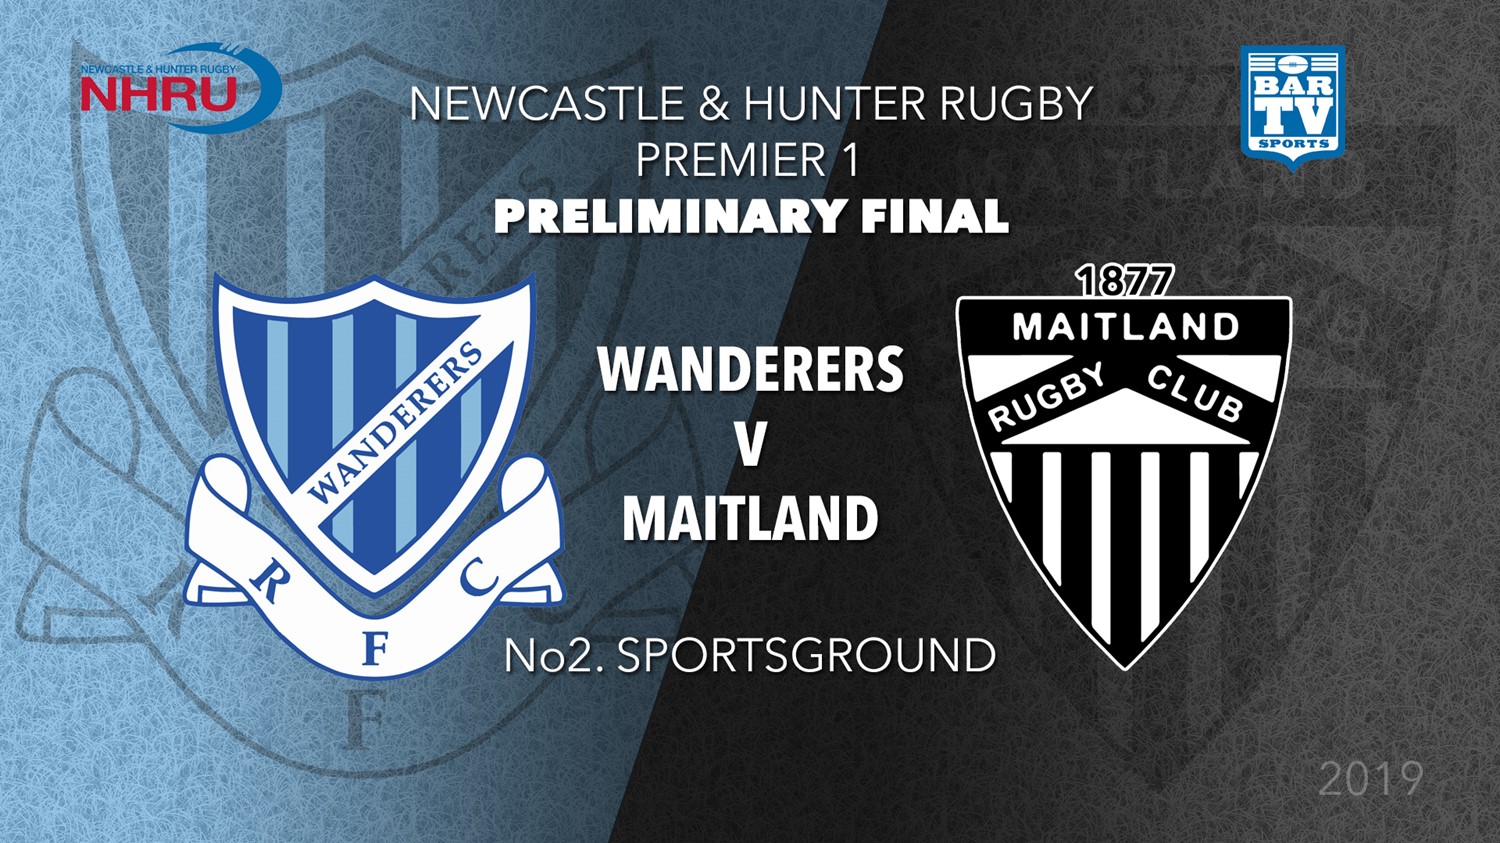 NHRU Preliminary Final - Premier 1 - Wanderers v Maitland Minigame Slate Image